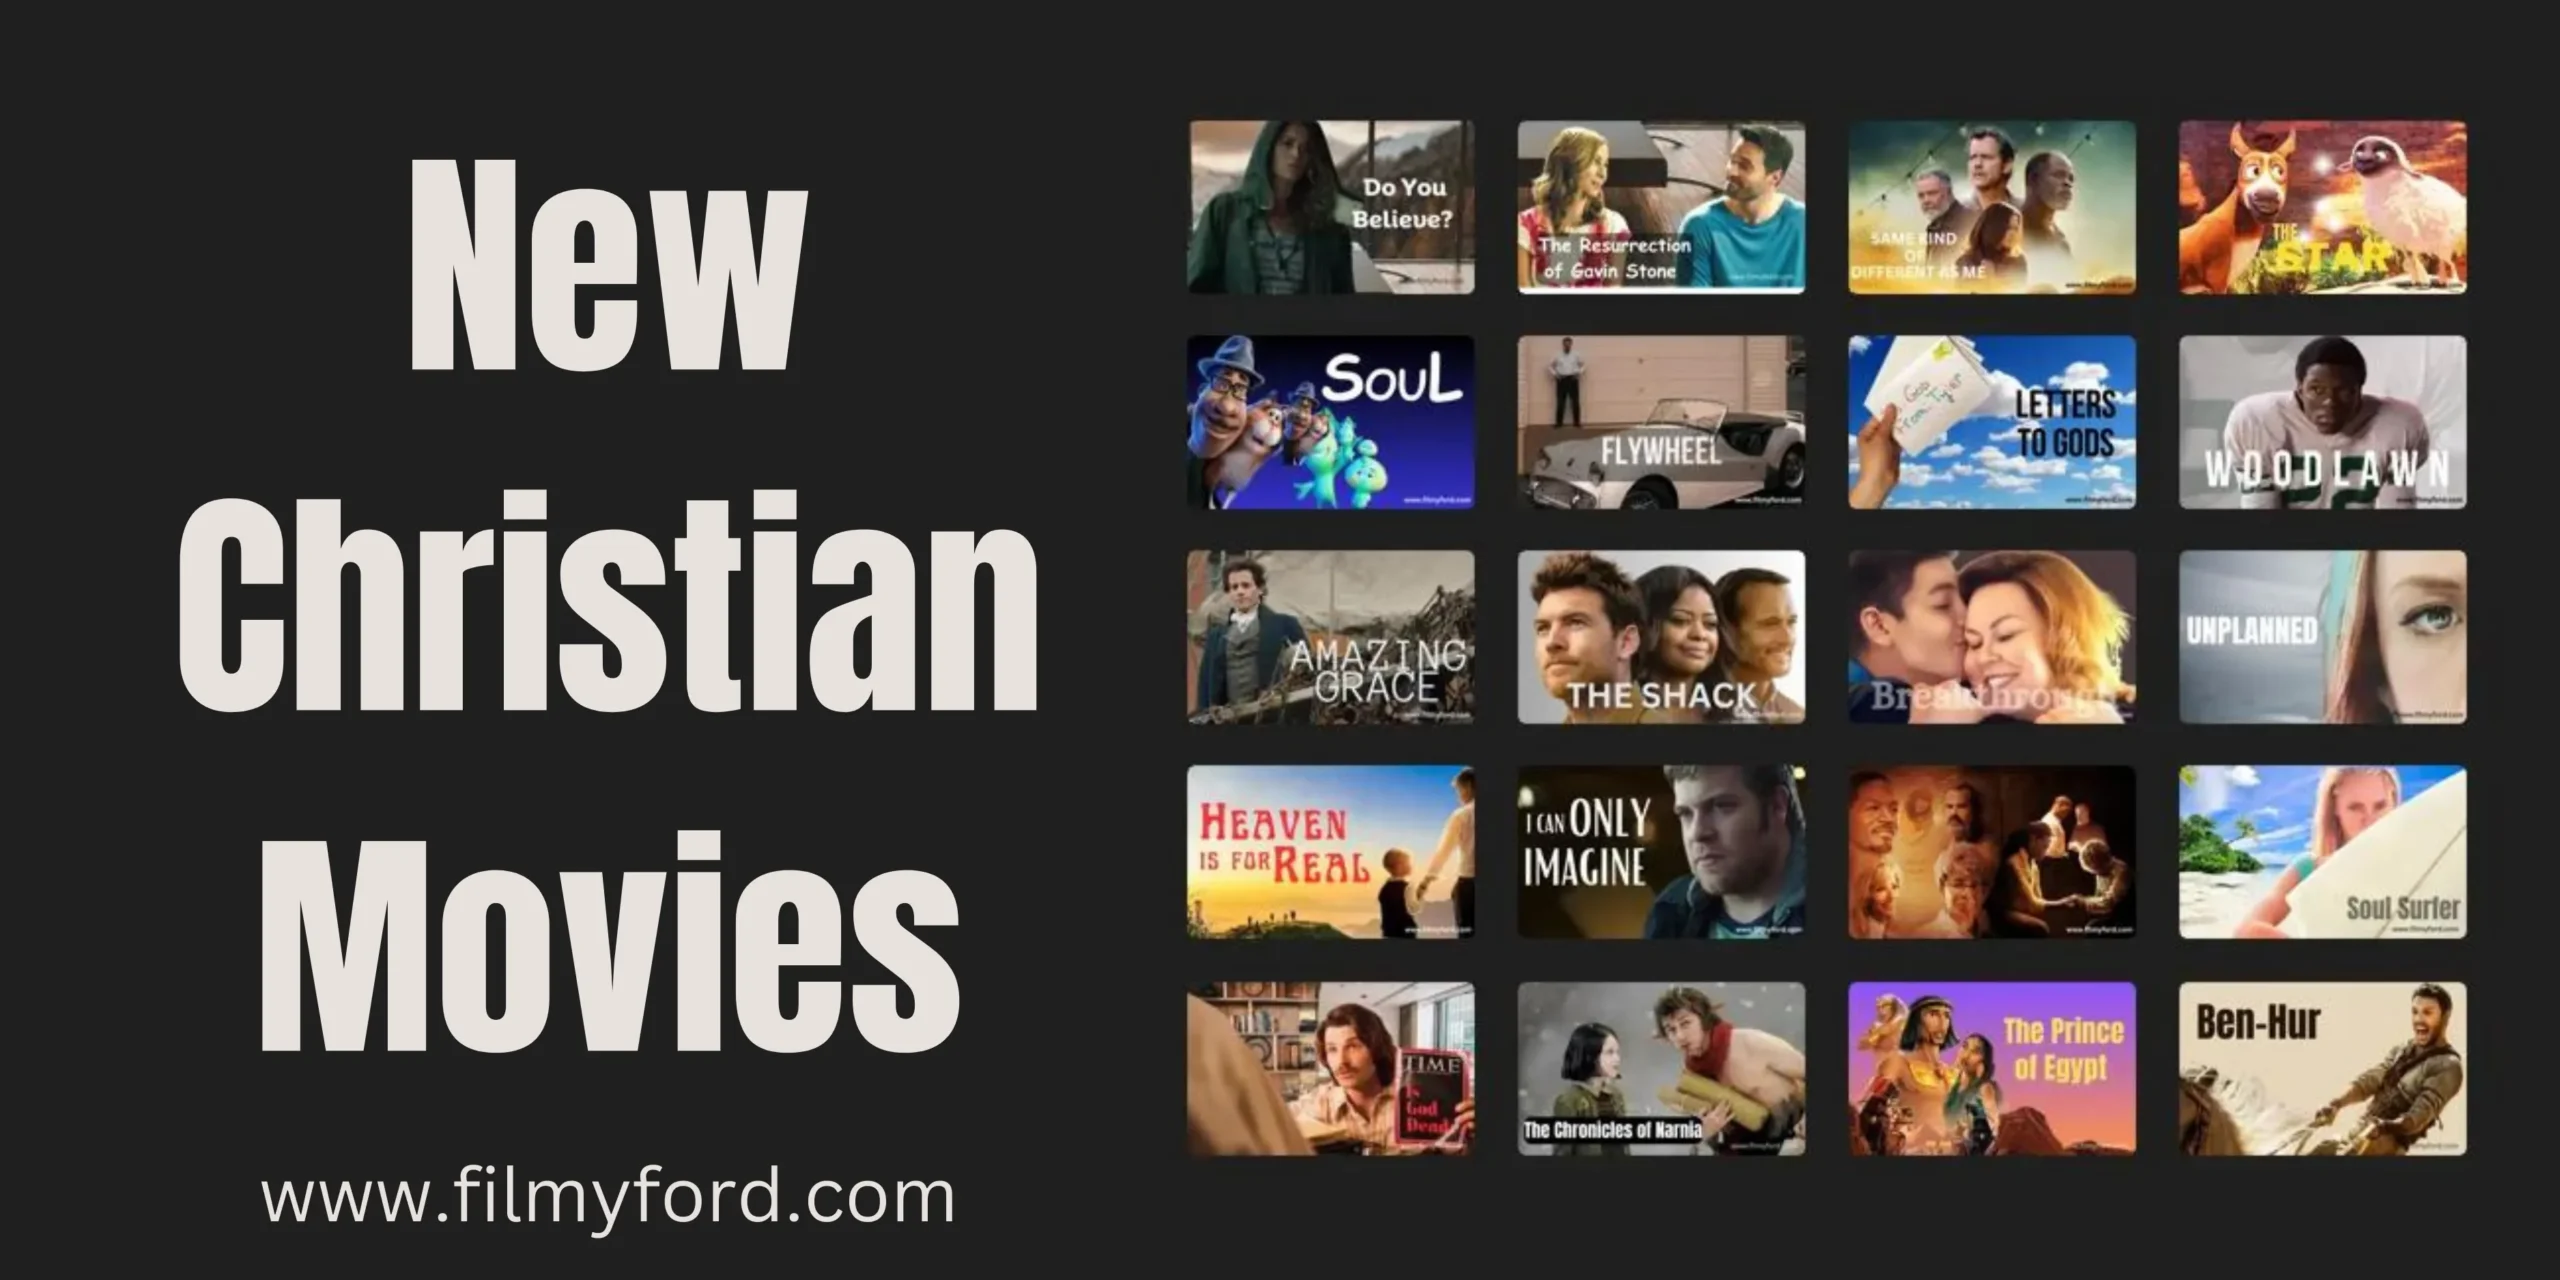 New Christian Movies